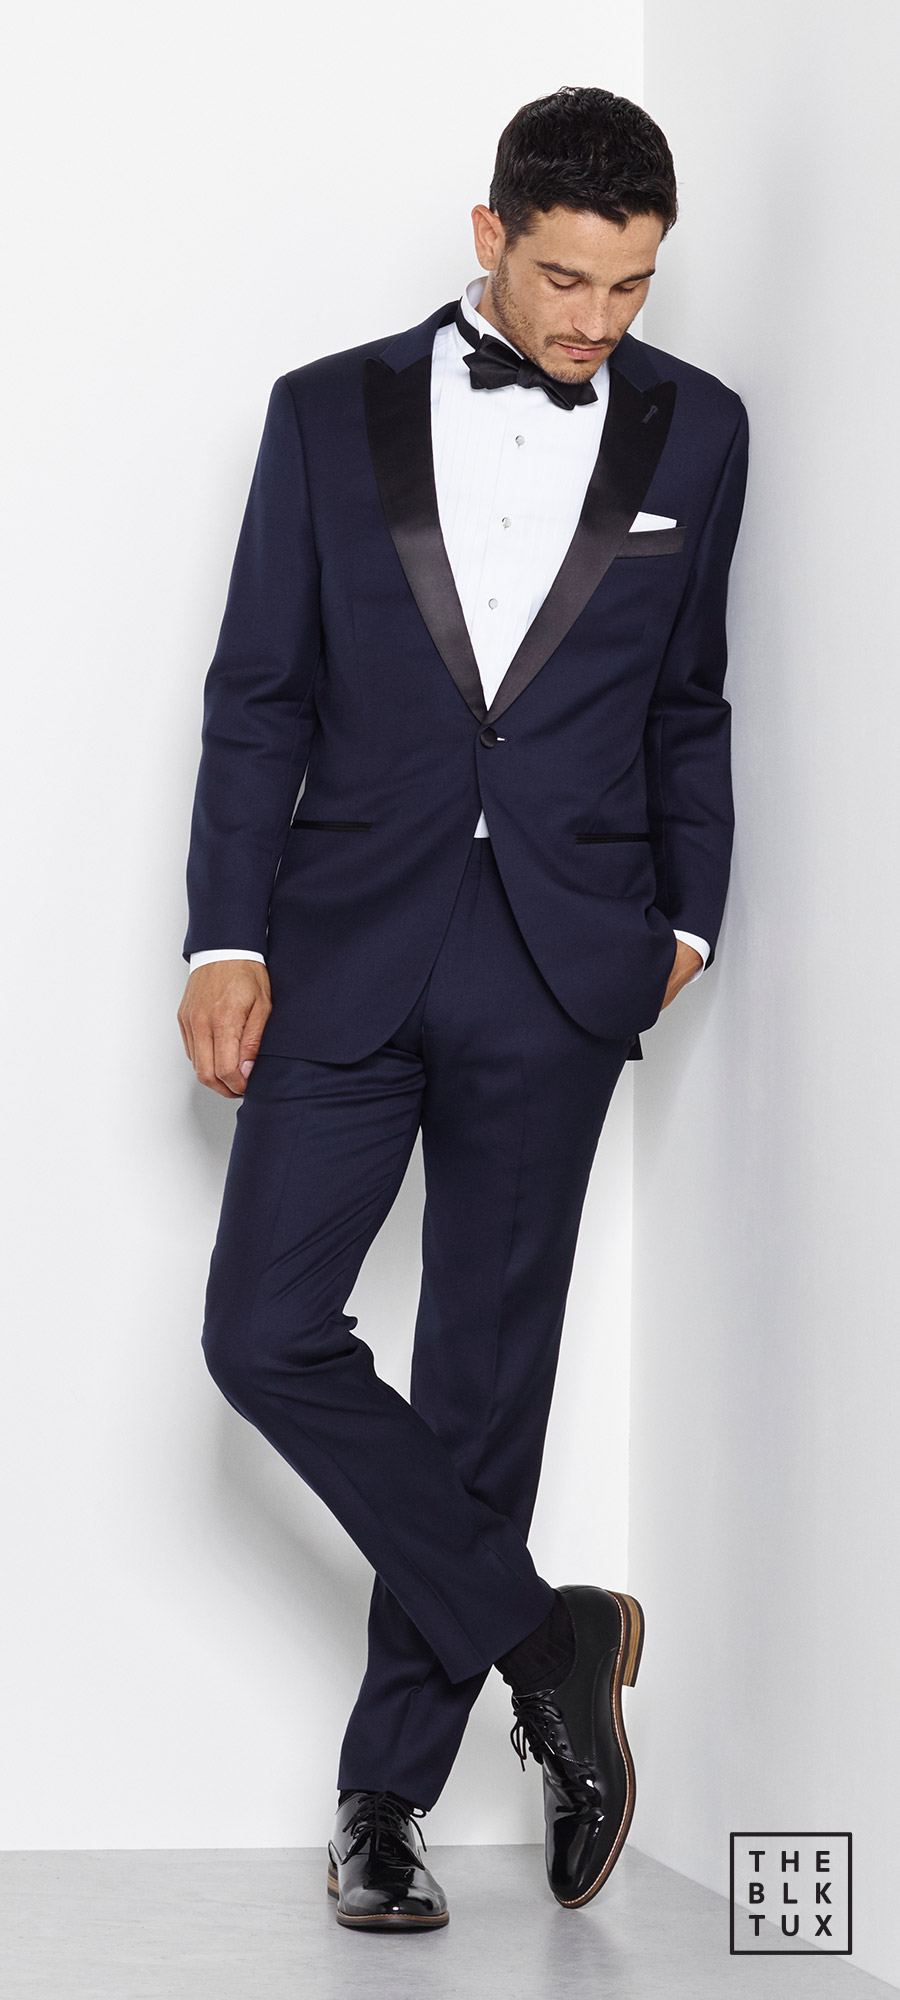 the black tux 2017 online tuxedo rental service the midnight blue tuxedo groommen best man style